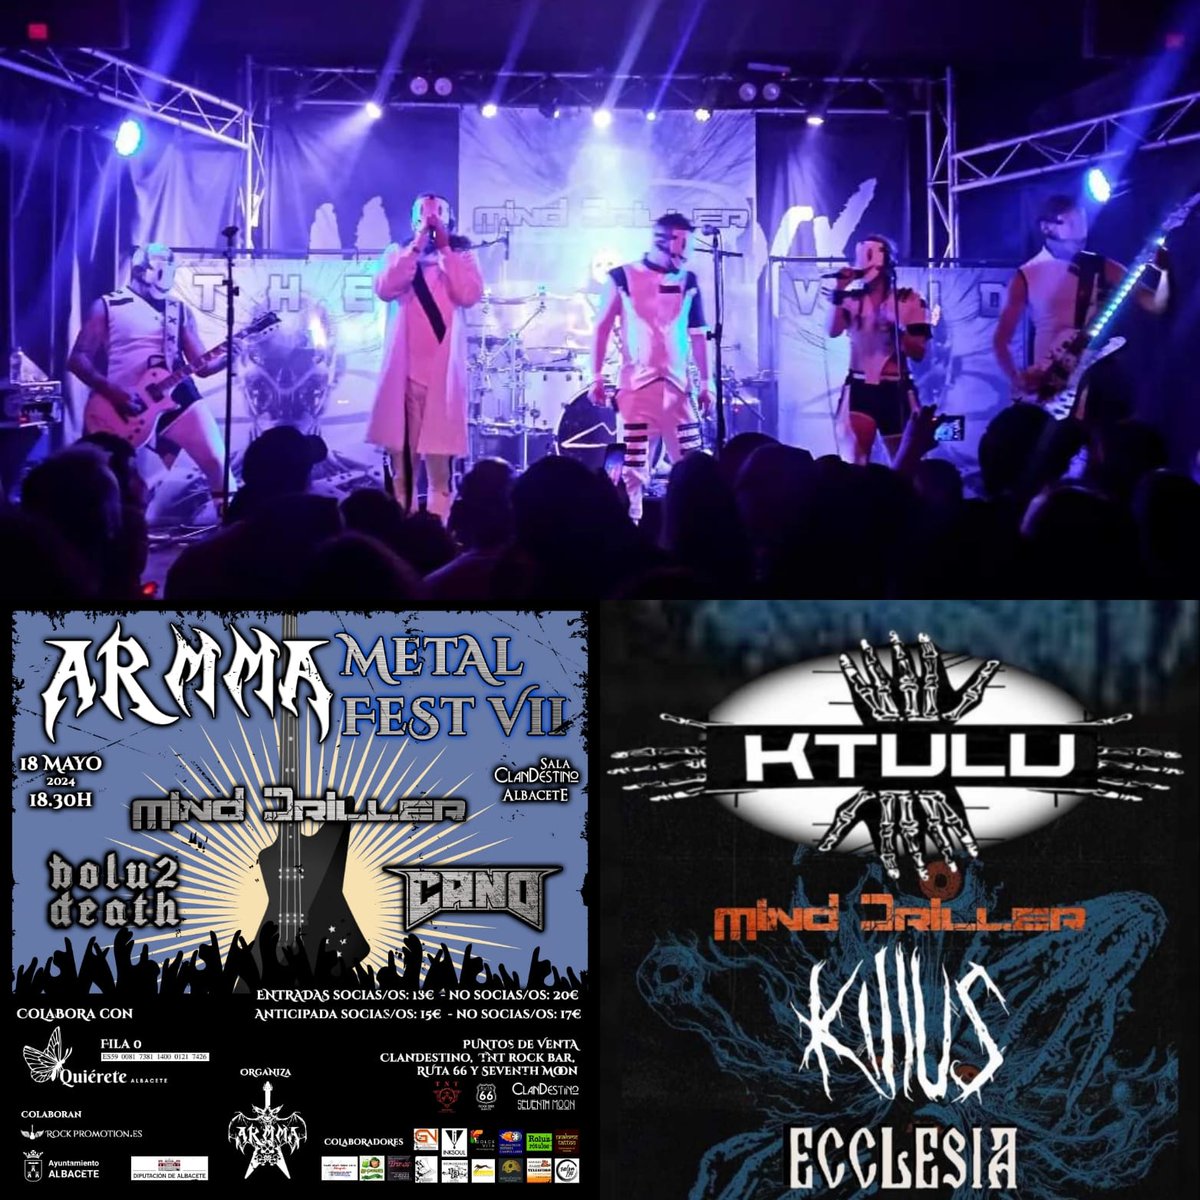 Este próximo sábado 18 MAYO ALBACETE Armma Metal fest Sala Clandestino Próximo 25 MAYO ZARAGOZA Sala centro musical las armas